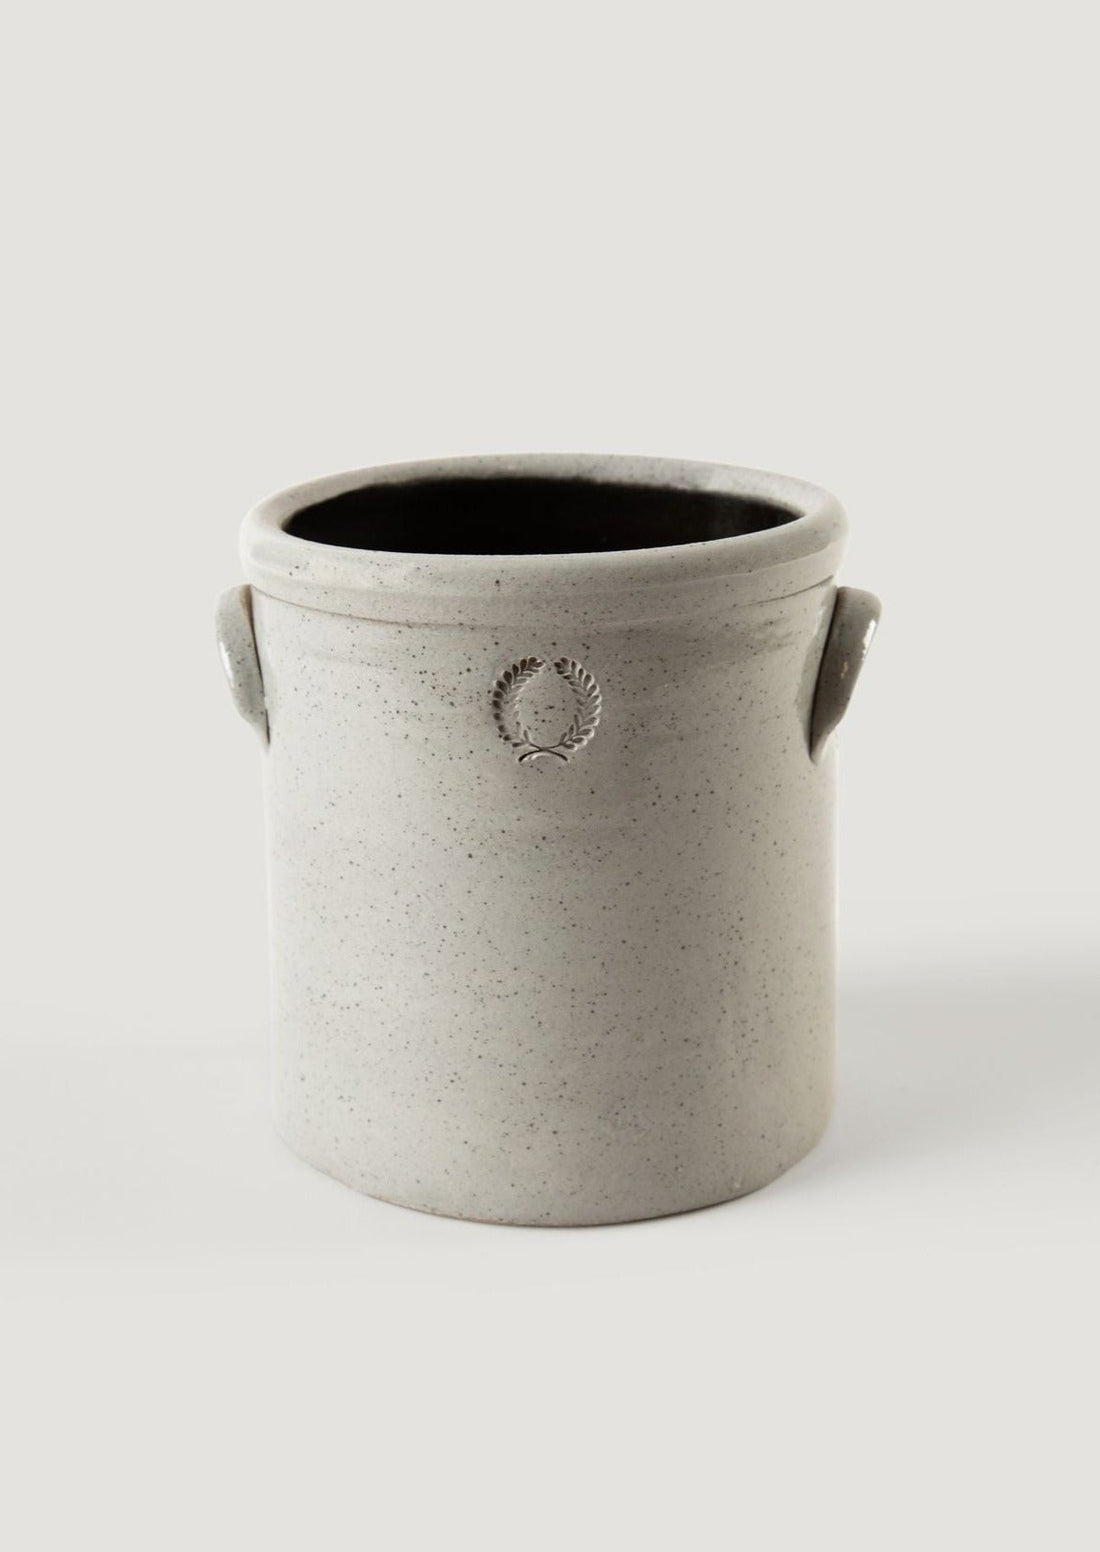 Grey Glazed Stoneware Crock from Farmhouse Pottery